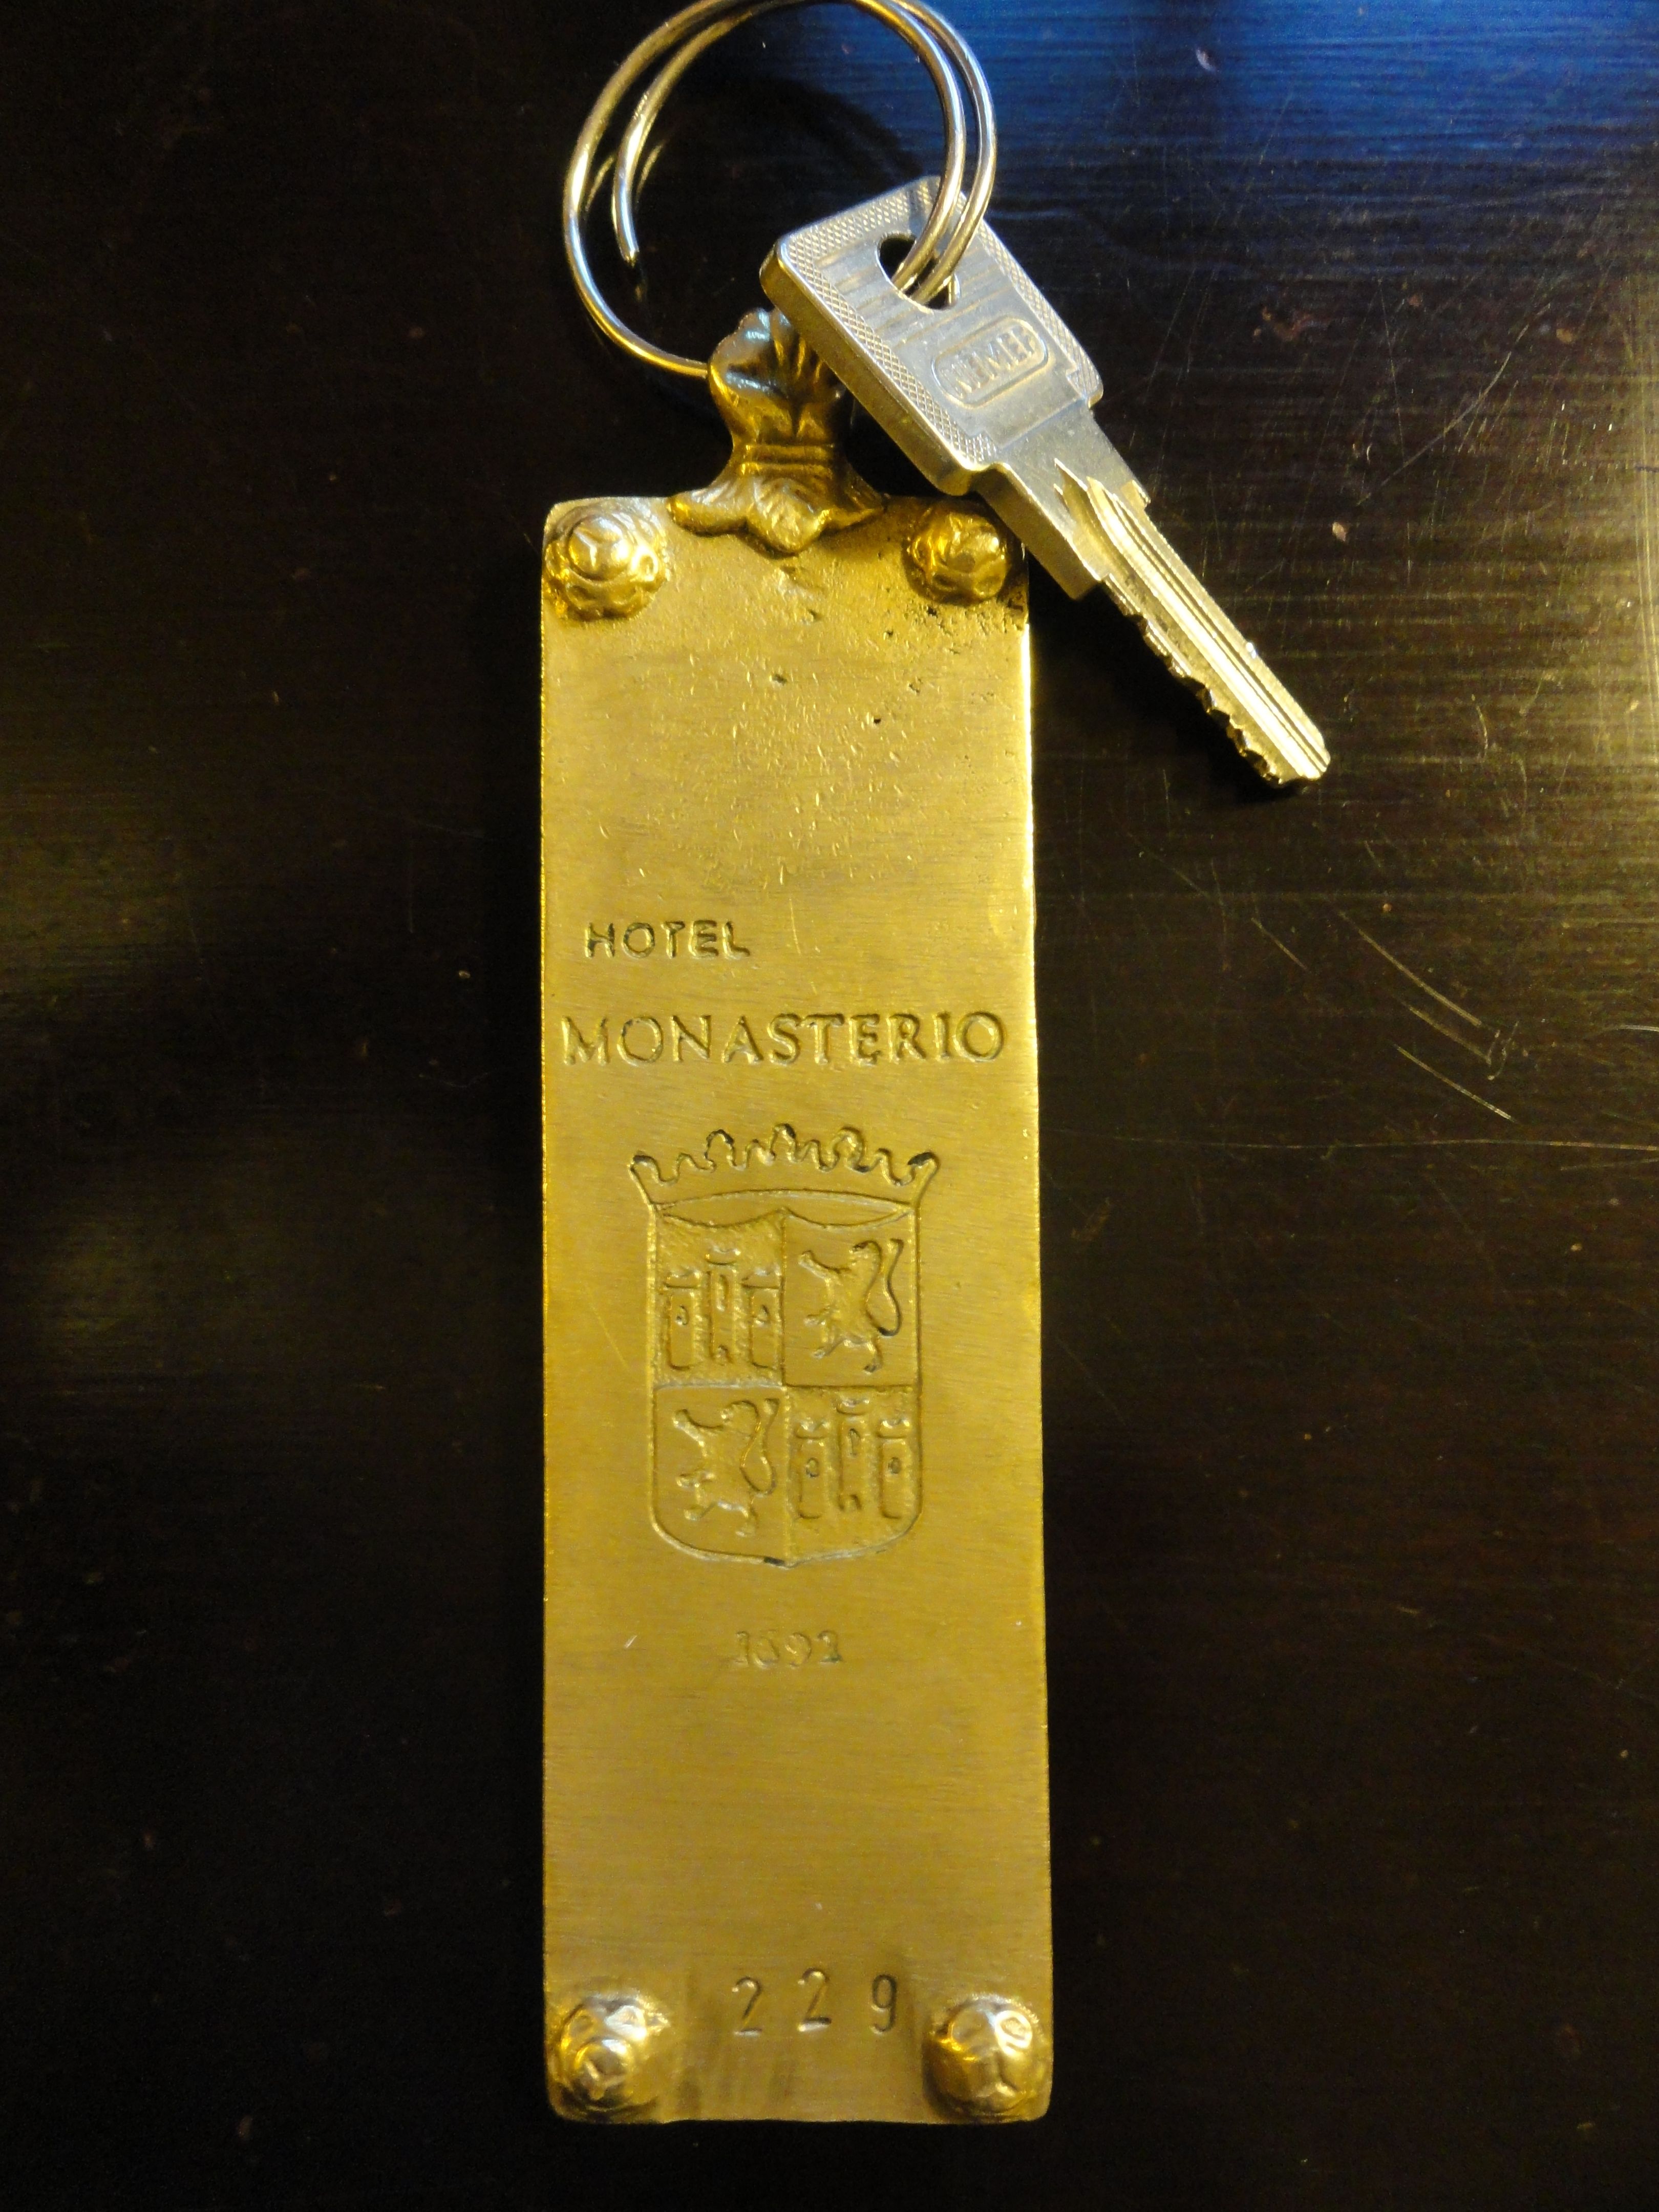 Monasterio Hotel11 (key).JPG